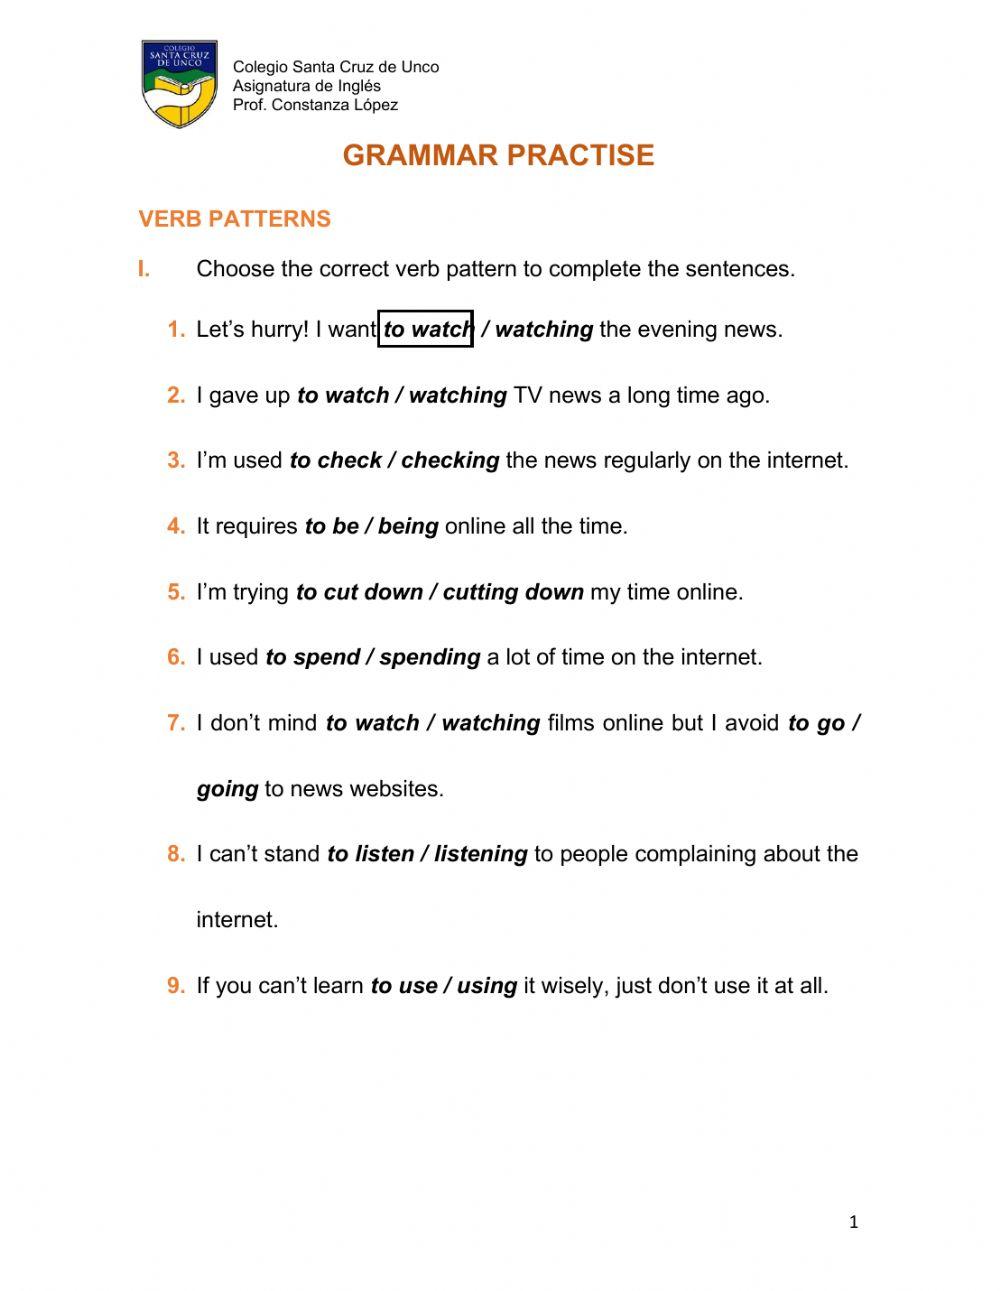 Grammar practise - verb patterns